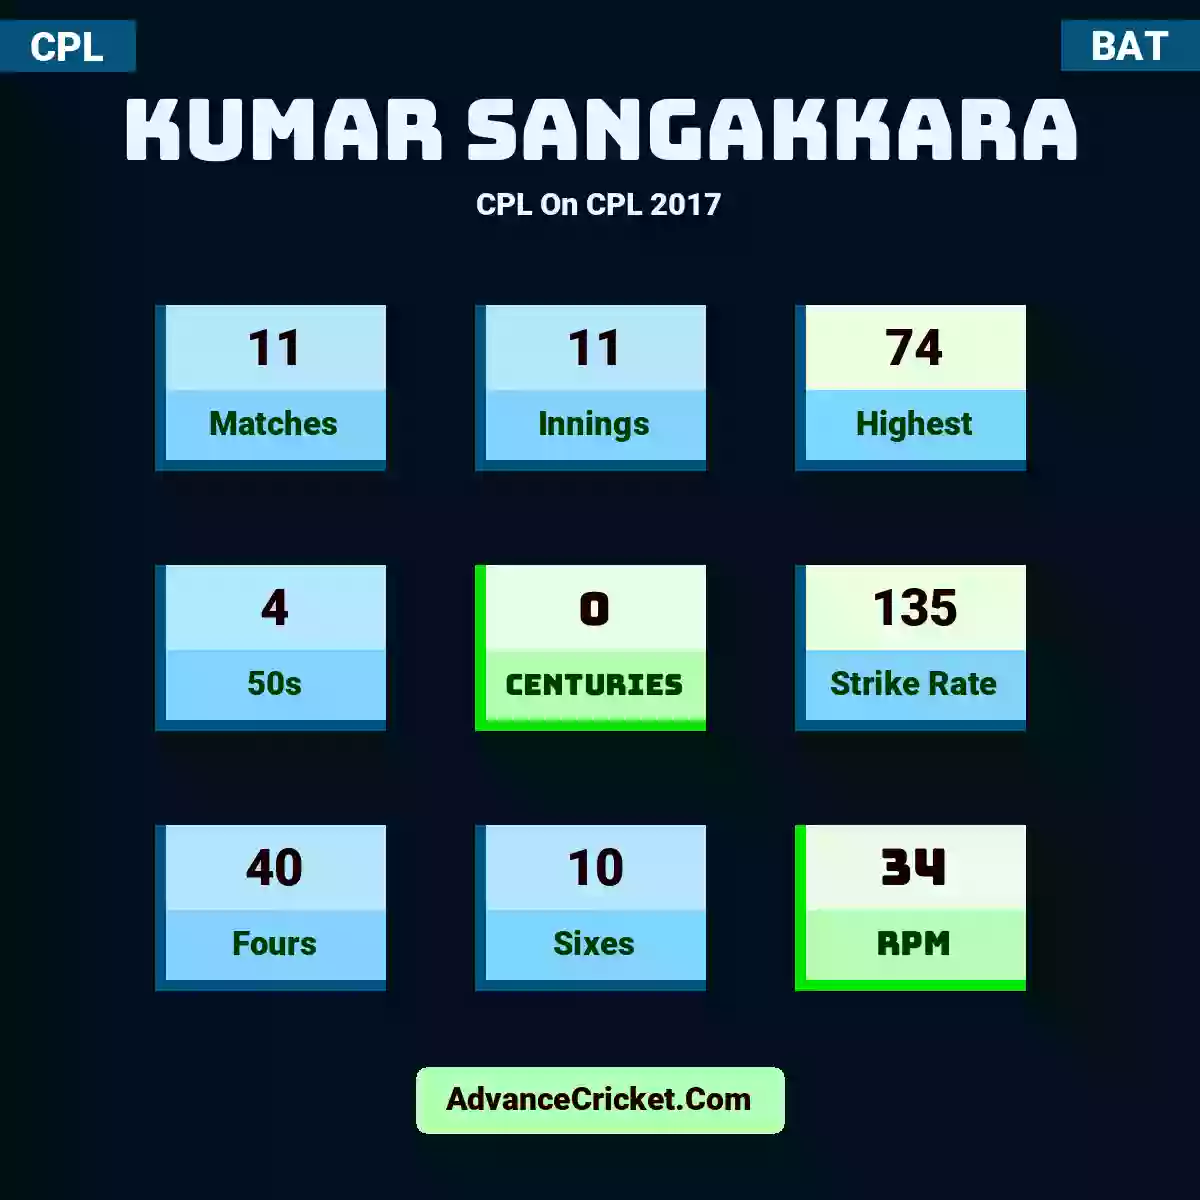 Kumar Sangakkara CPL  On CPL 2017, Kumar Sangakkara played 11 matches, scored 74 runs as highest, 4 half-centuries, and 0 centuries, with a strike rate of 135. K.Sangakkara hit 40 fours and 10 sixes, with an RPM of 34.